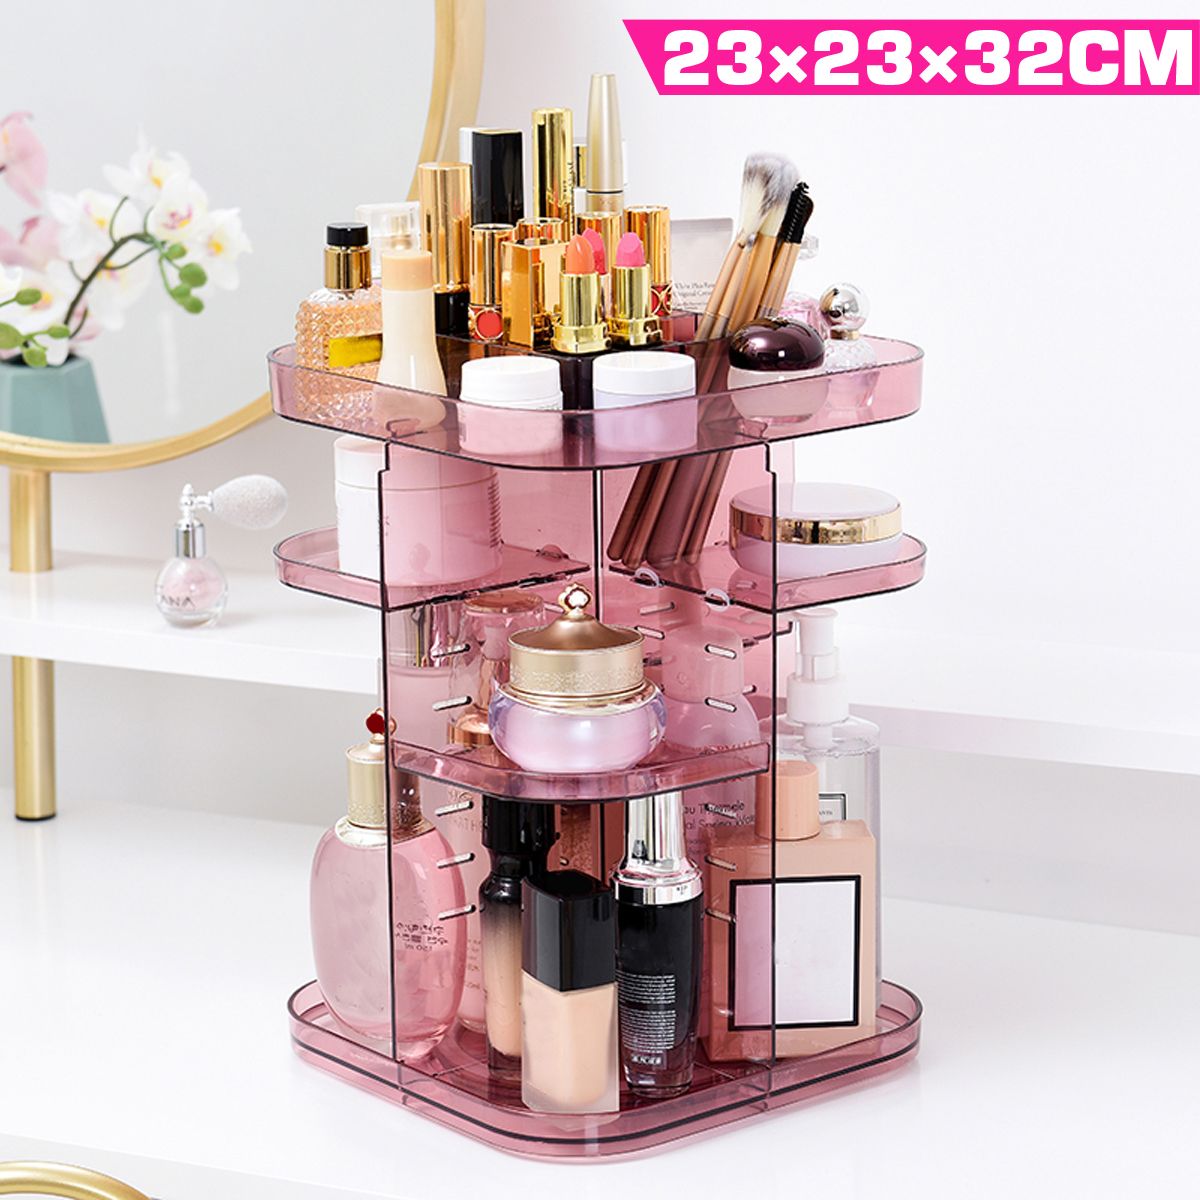 Adjustable-360deg-Rotating-Makeup-Jewelry-Box-Square-Storage-Rack-Organizer-Stand-Display-1595115